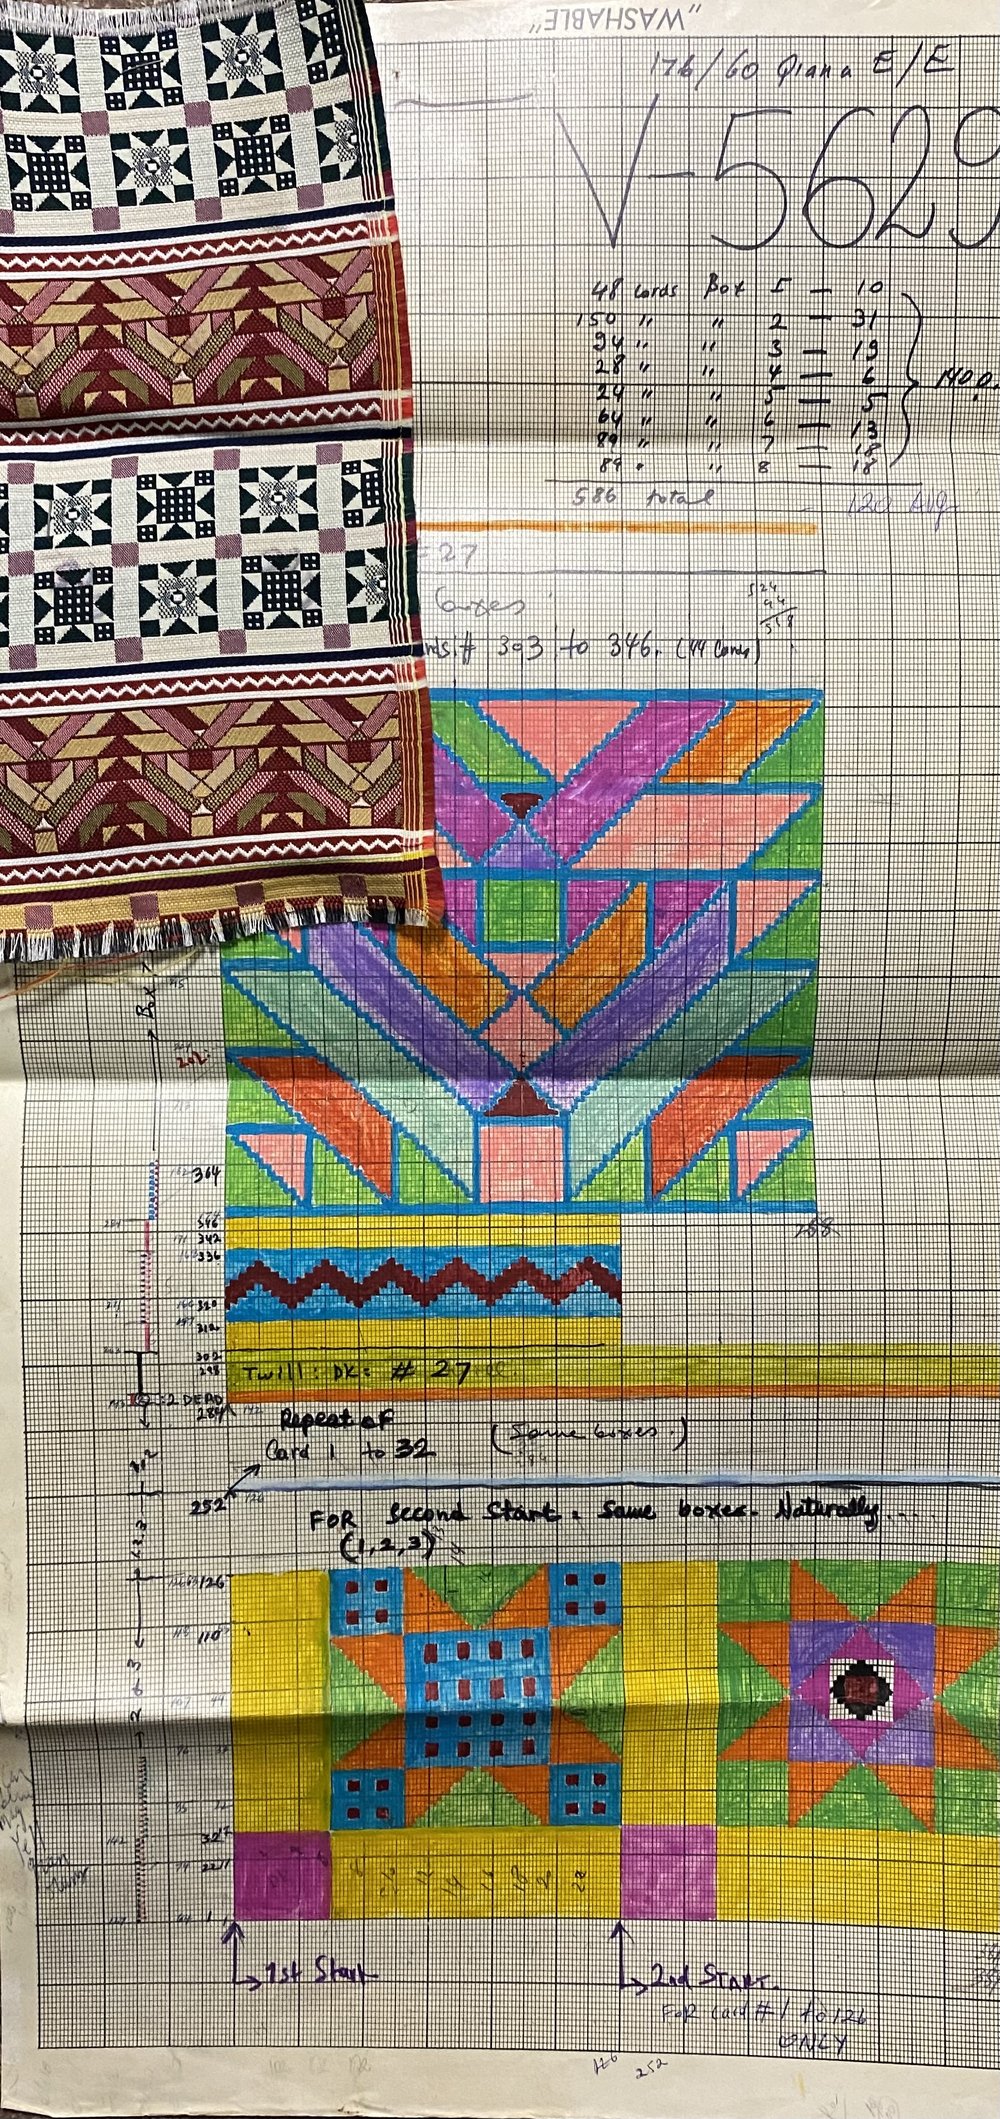 Pre-CAD tie design on graph paper. Courtesy of Peter Kuklinski